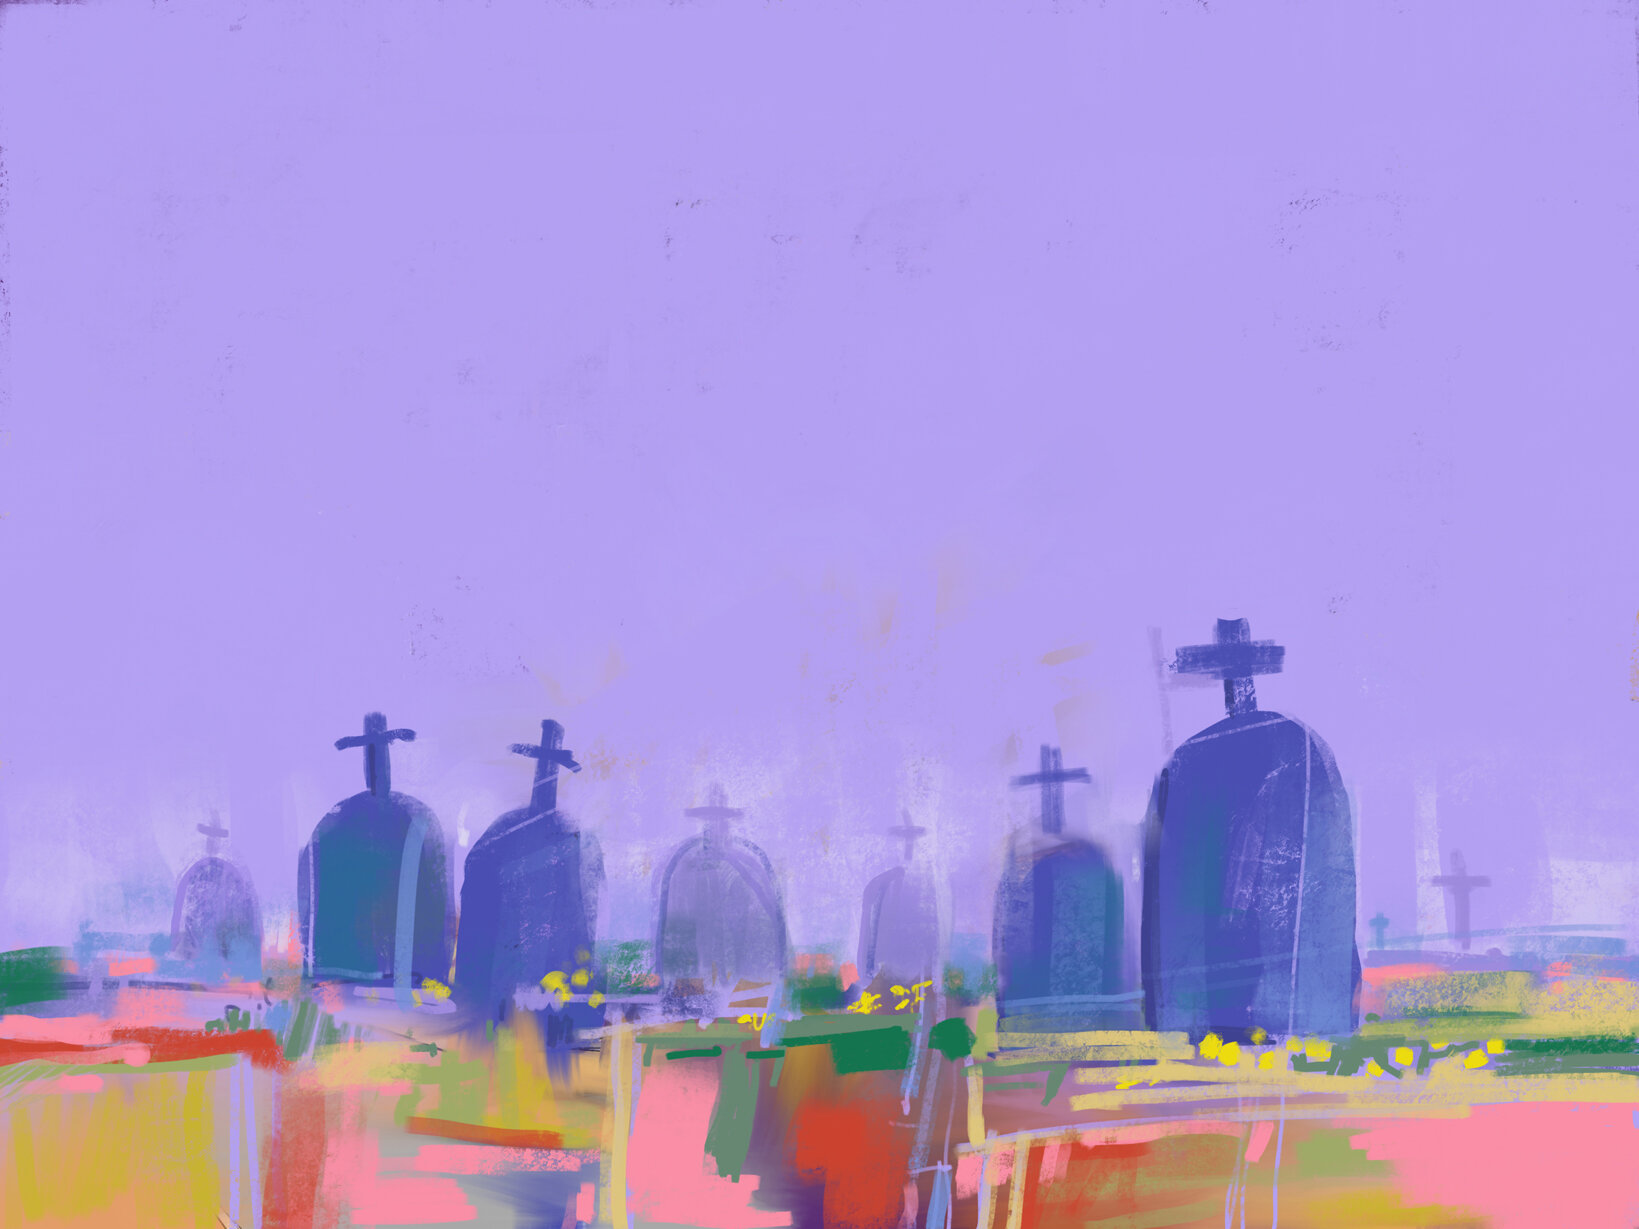 Cemetery-DAY_4x3.jpg